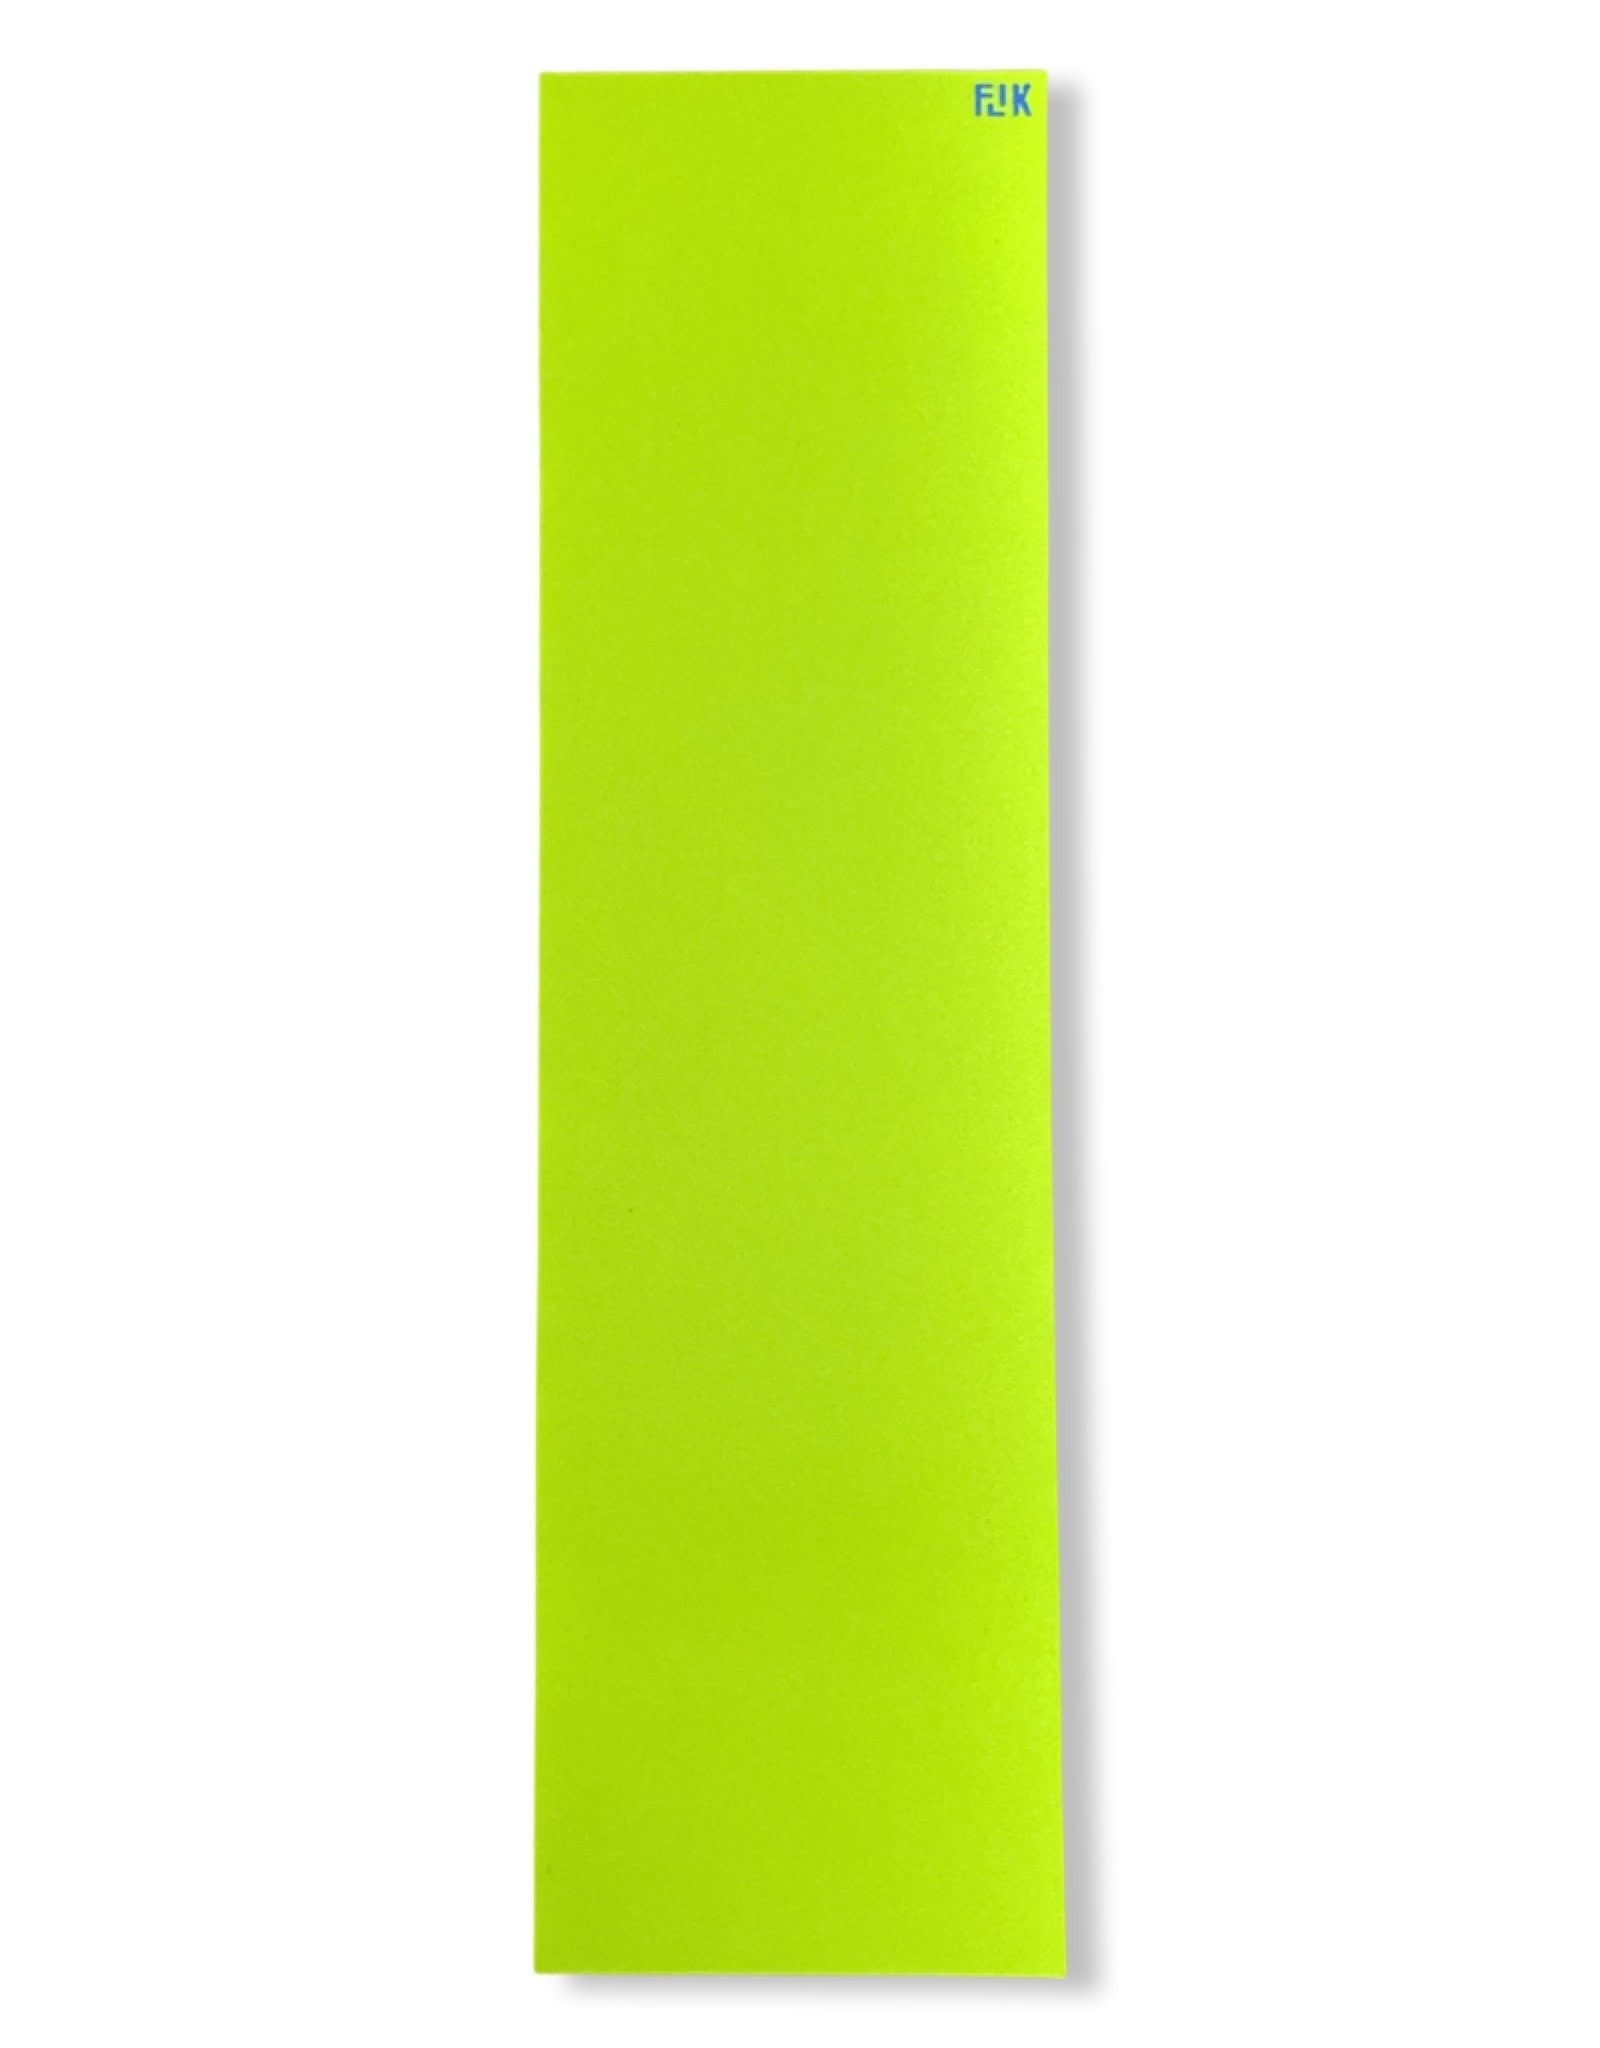 Flik Grip Tape (Neon Yellow)